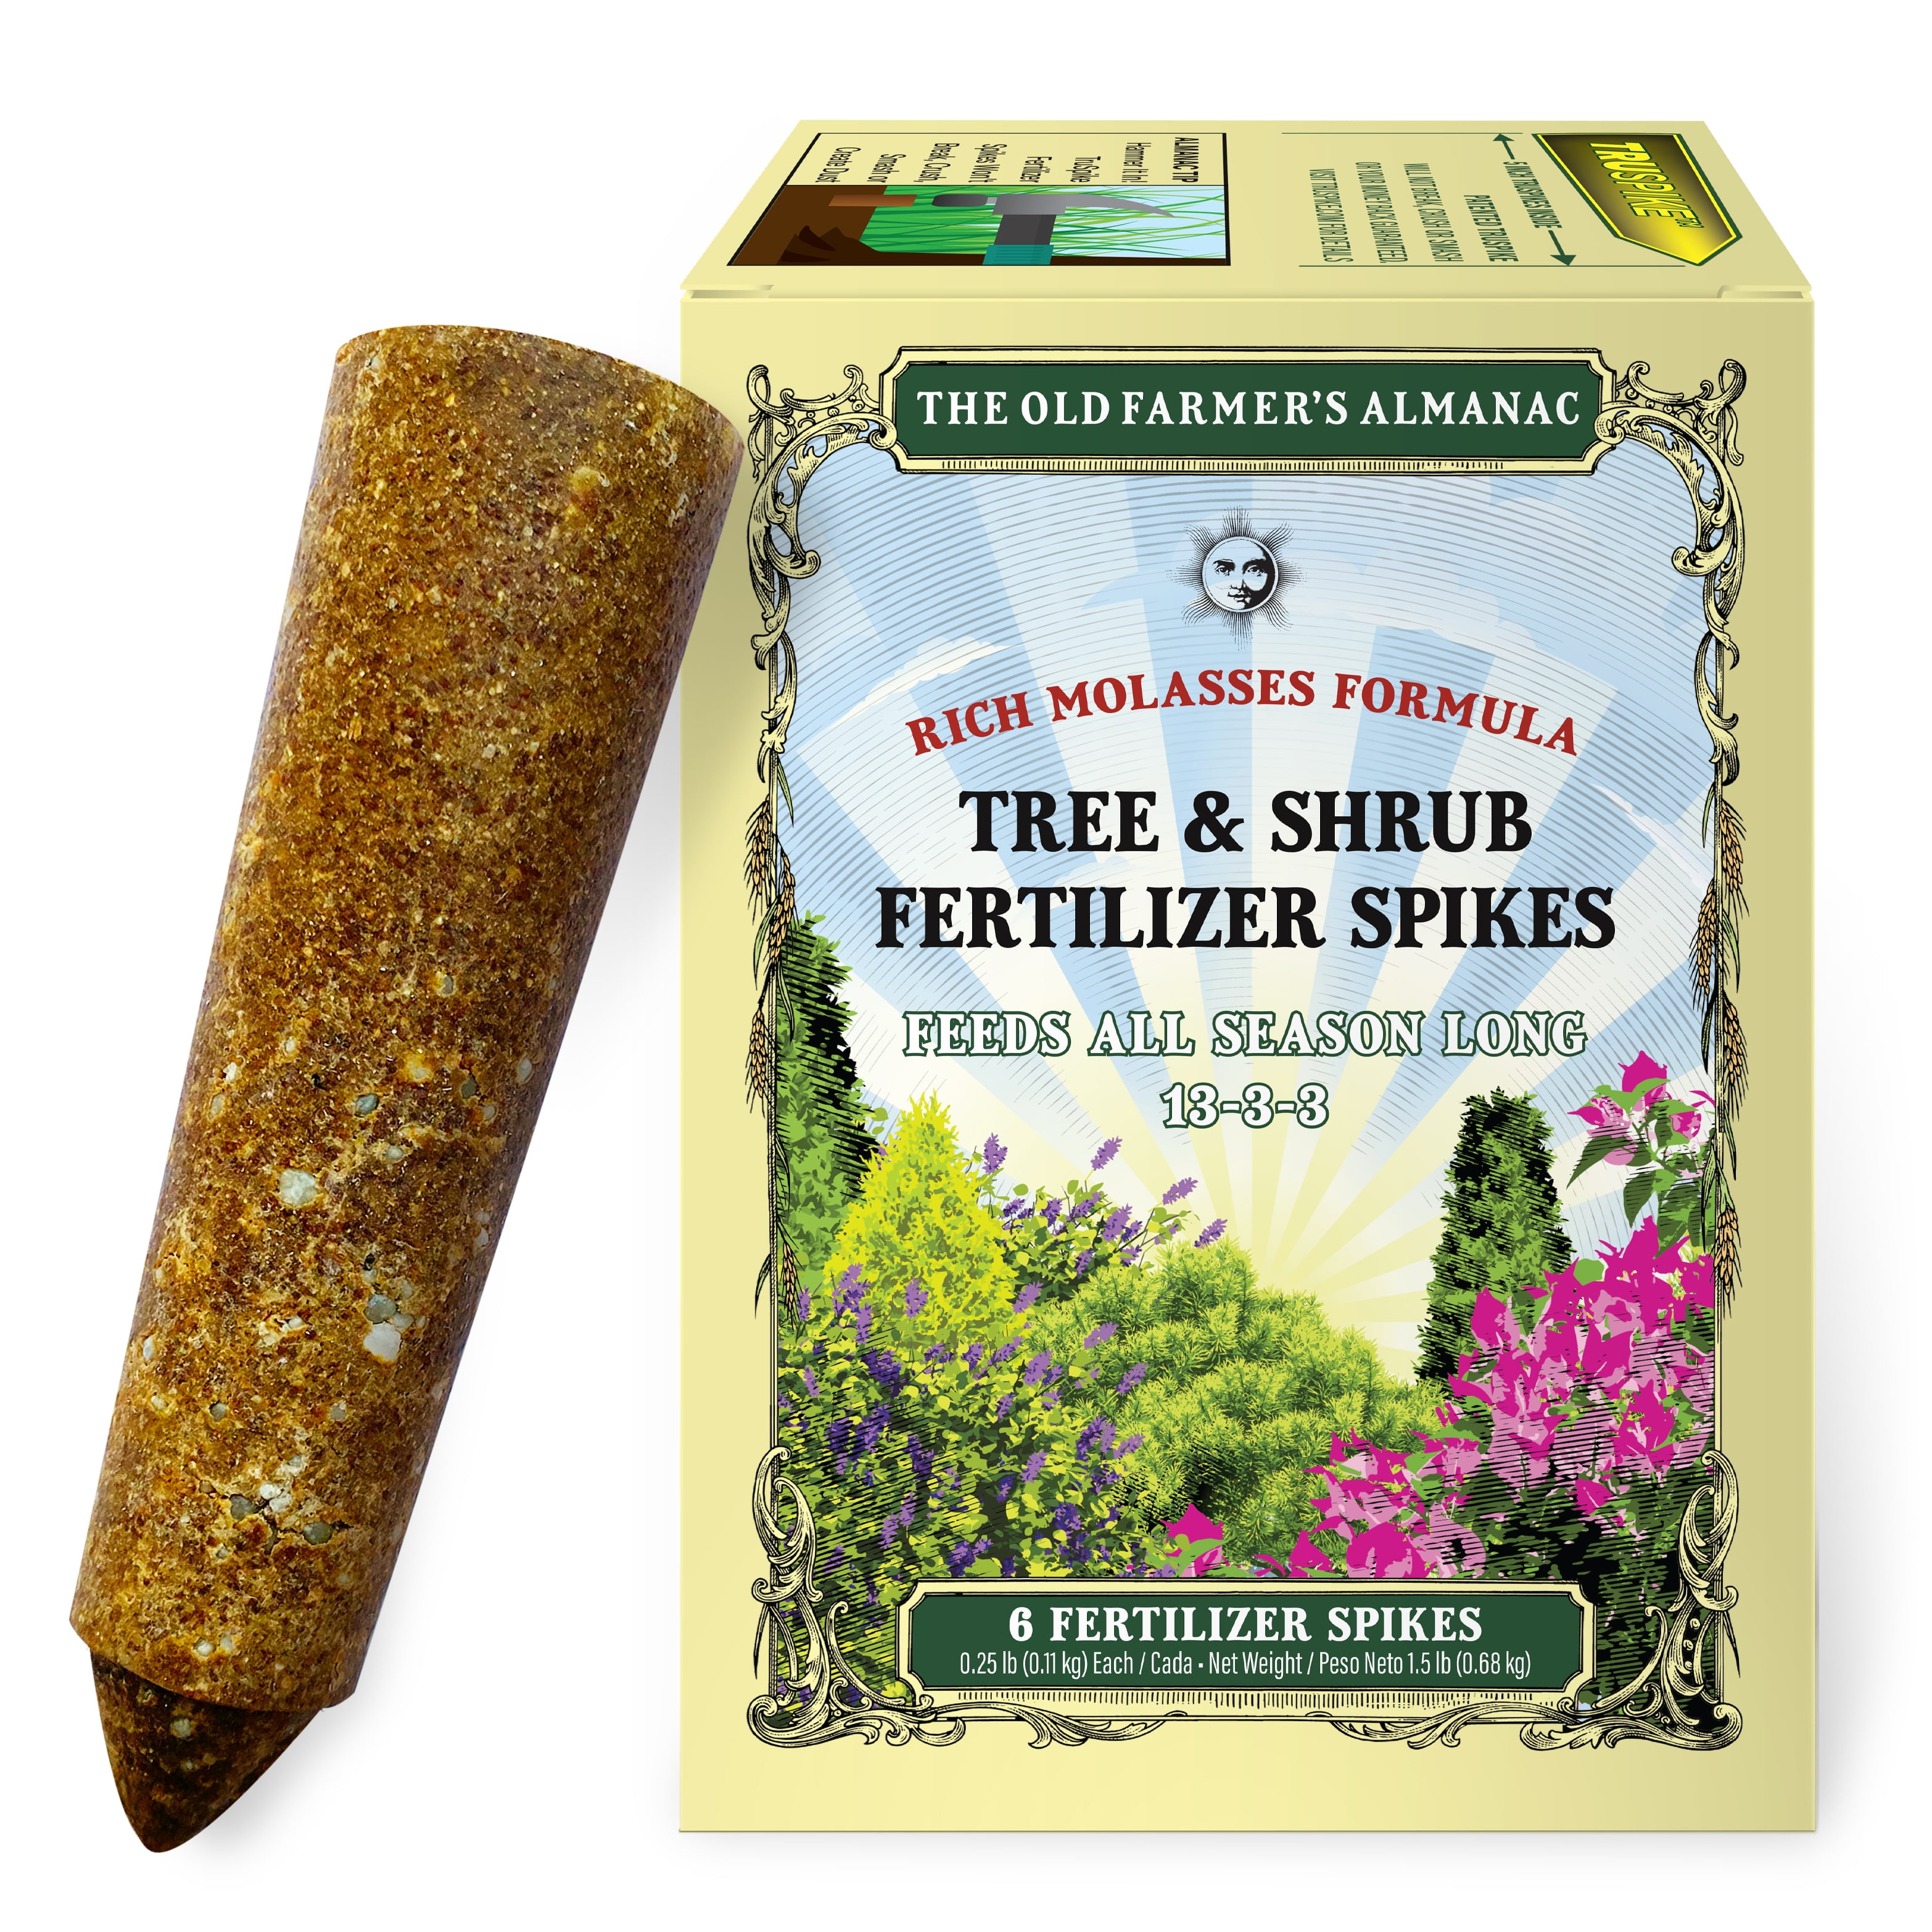 The Old Farmer's Almanac Fertilizer Spikes for Trees & Shrubs, 13-3-3 Fertilizer, 6 Pack, 1.5 lbs